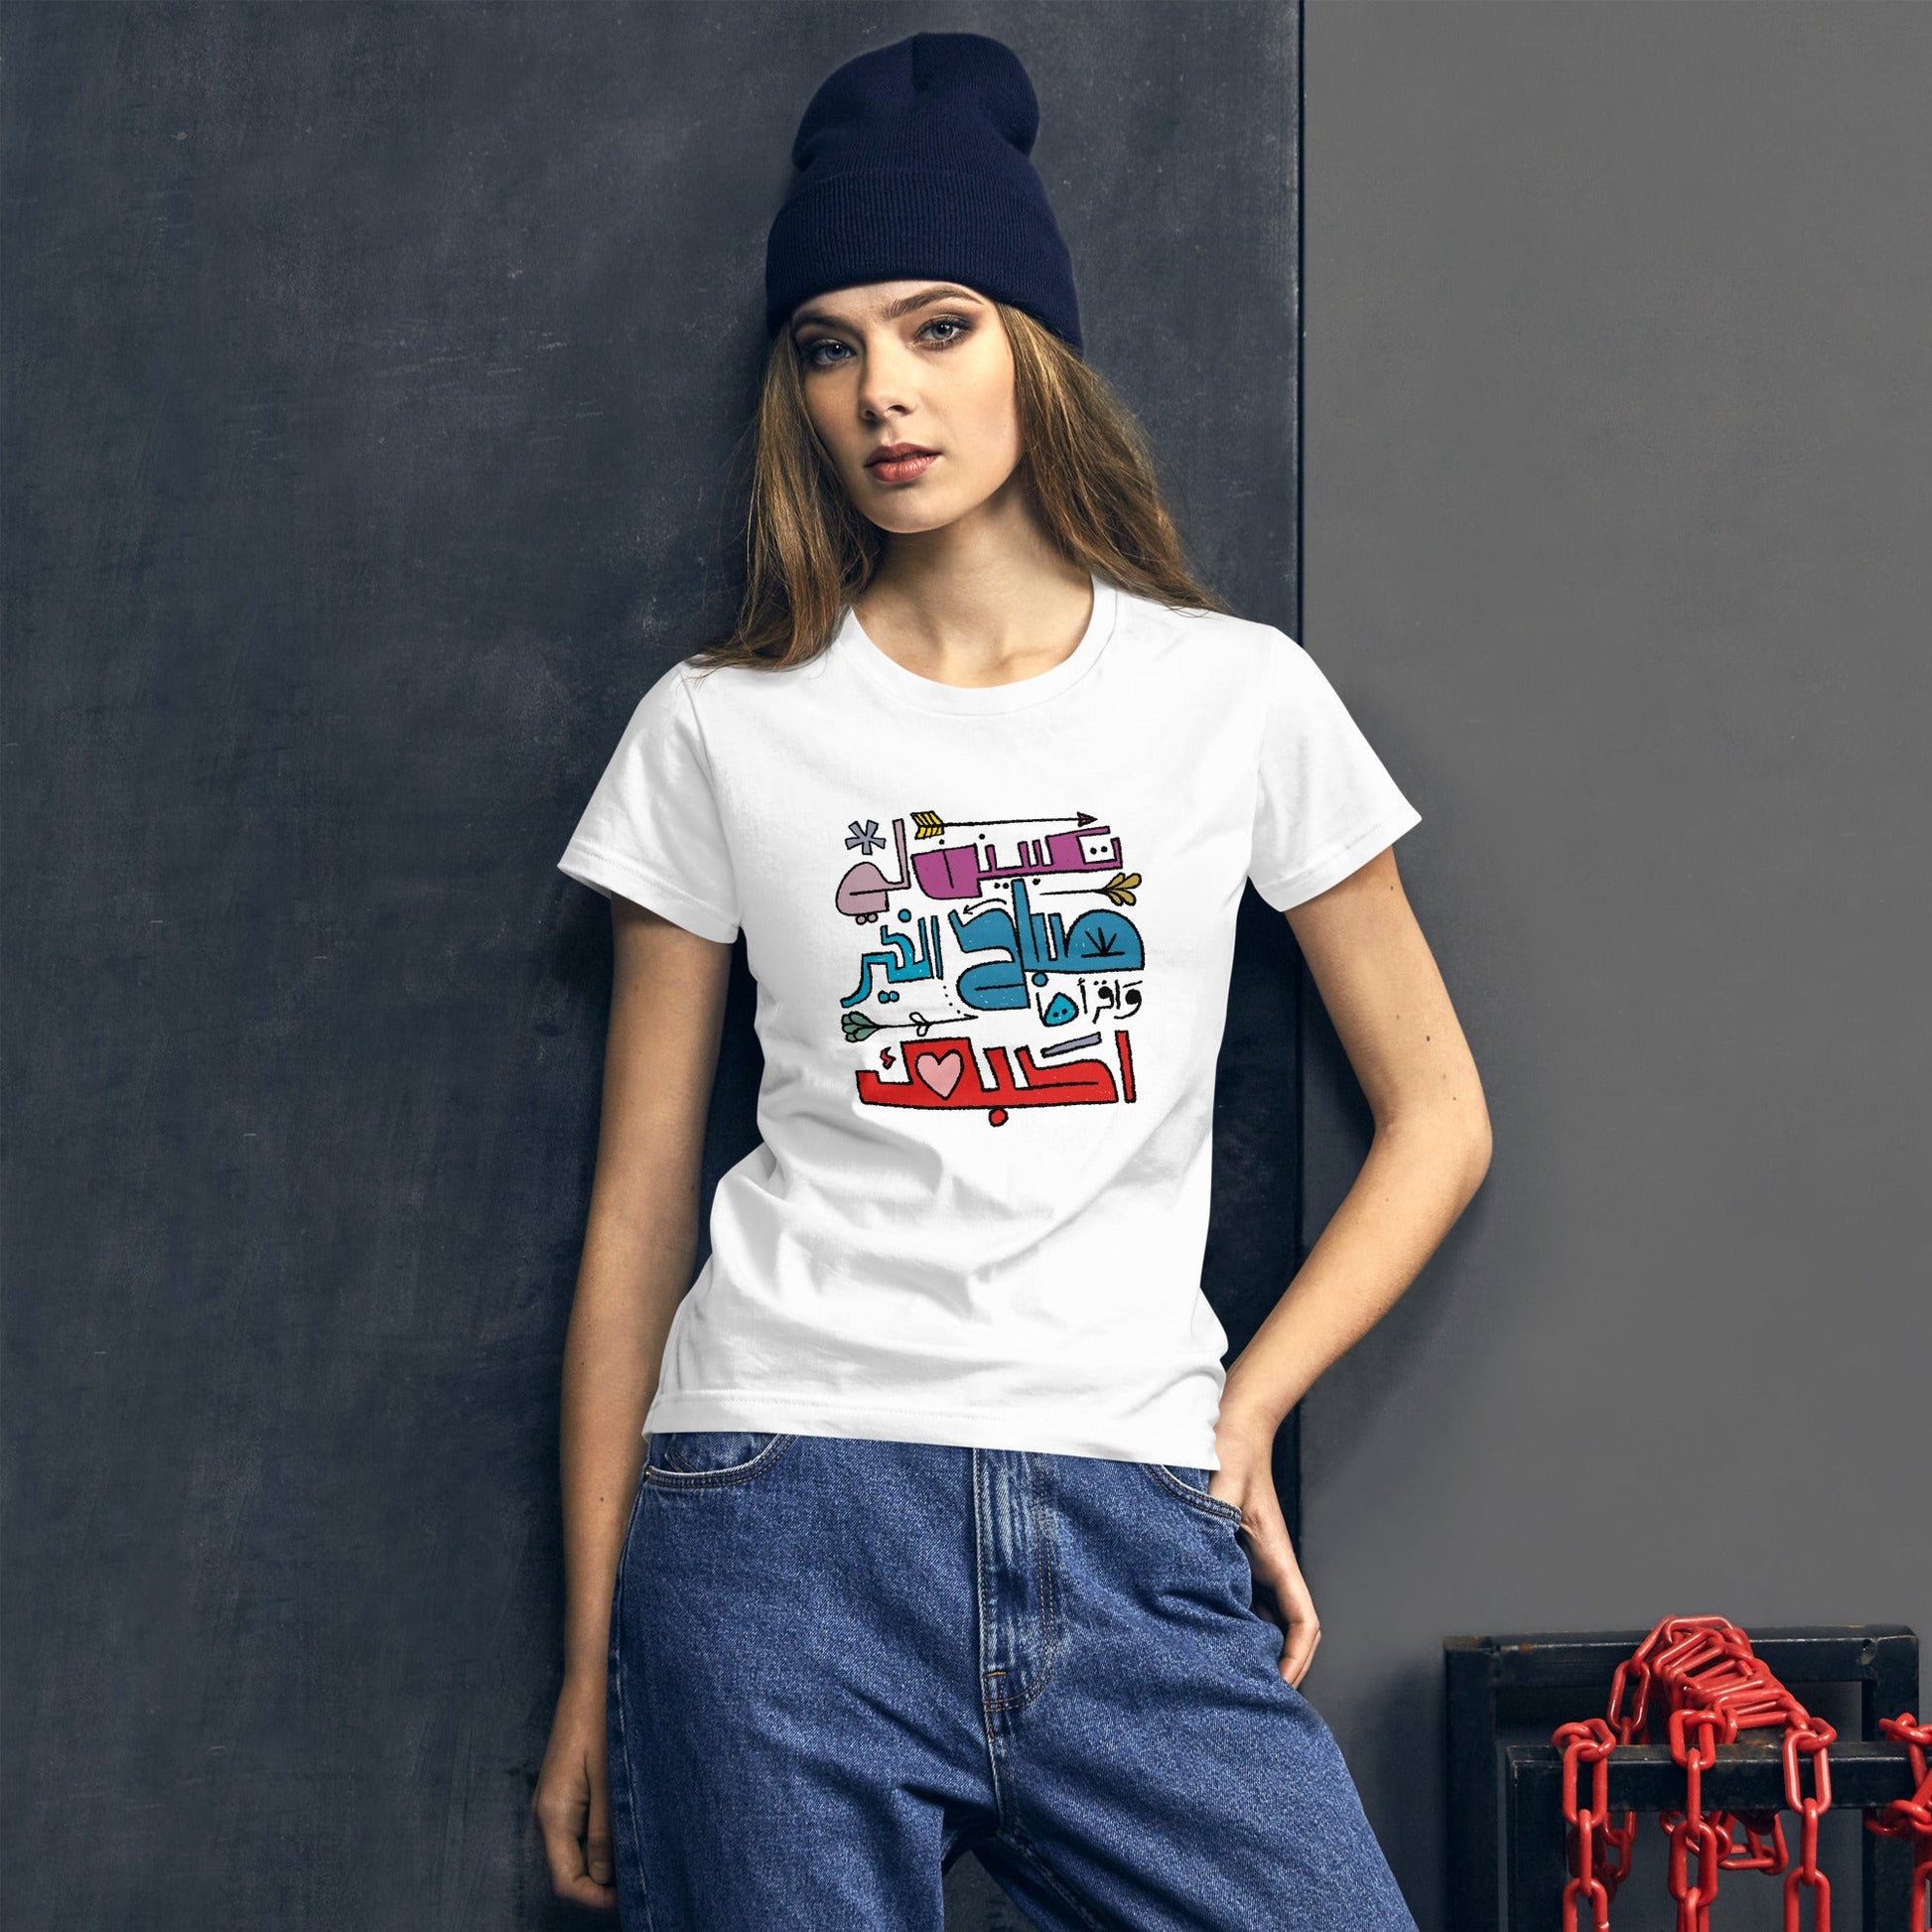 LOVE Women's T-Shirt - Bonotee